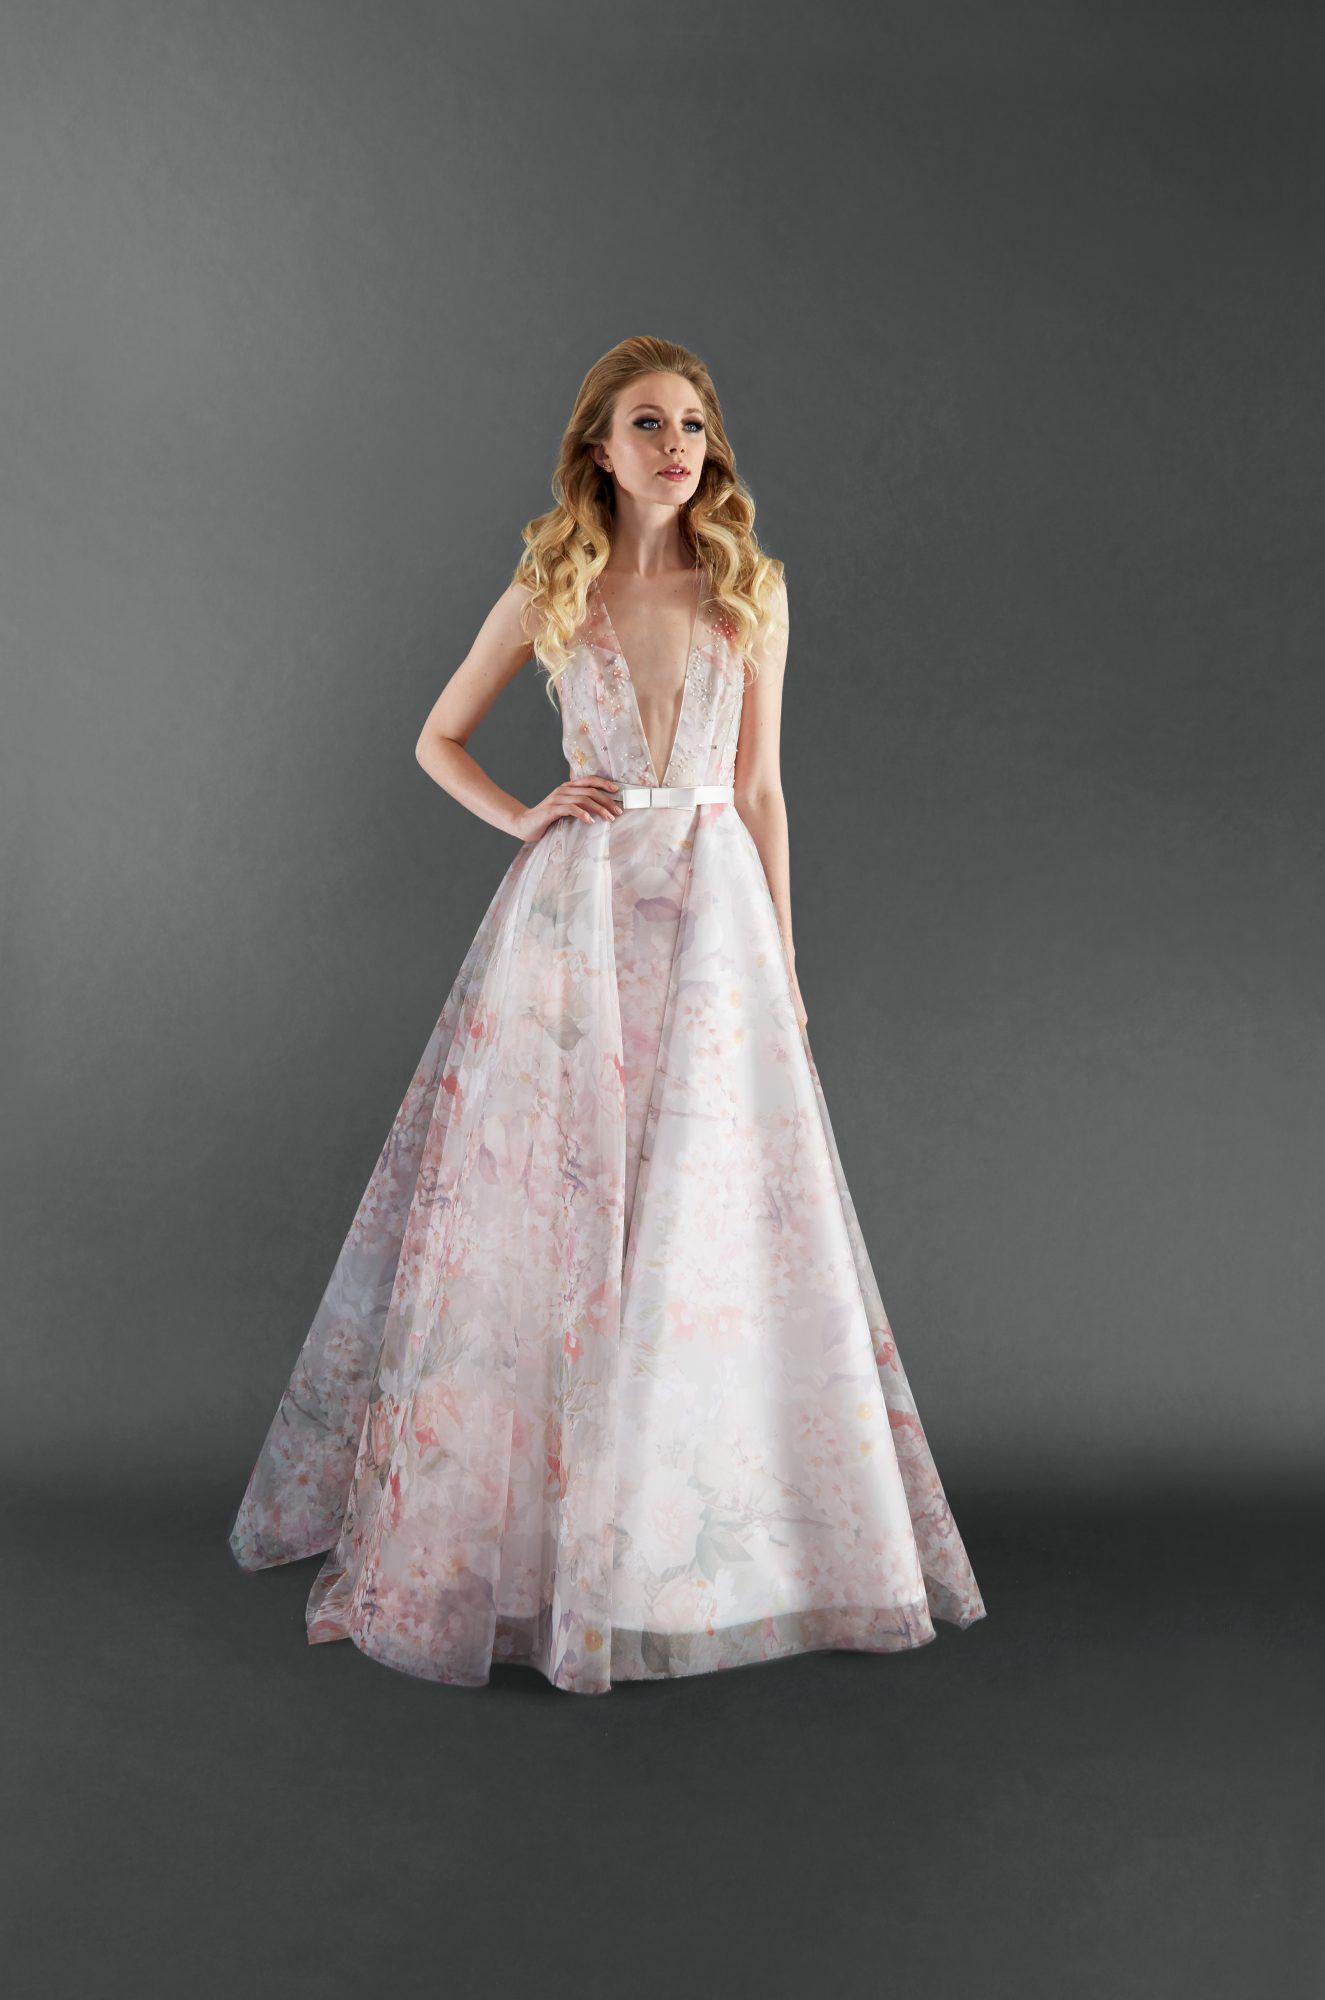 randi rahm v-neck pink floral wedding dress spring 2018